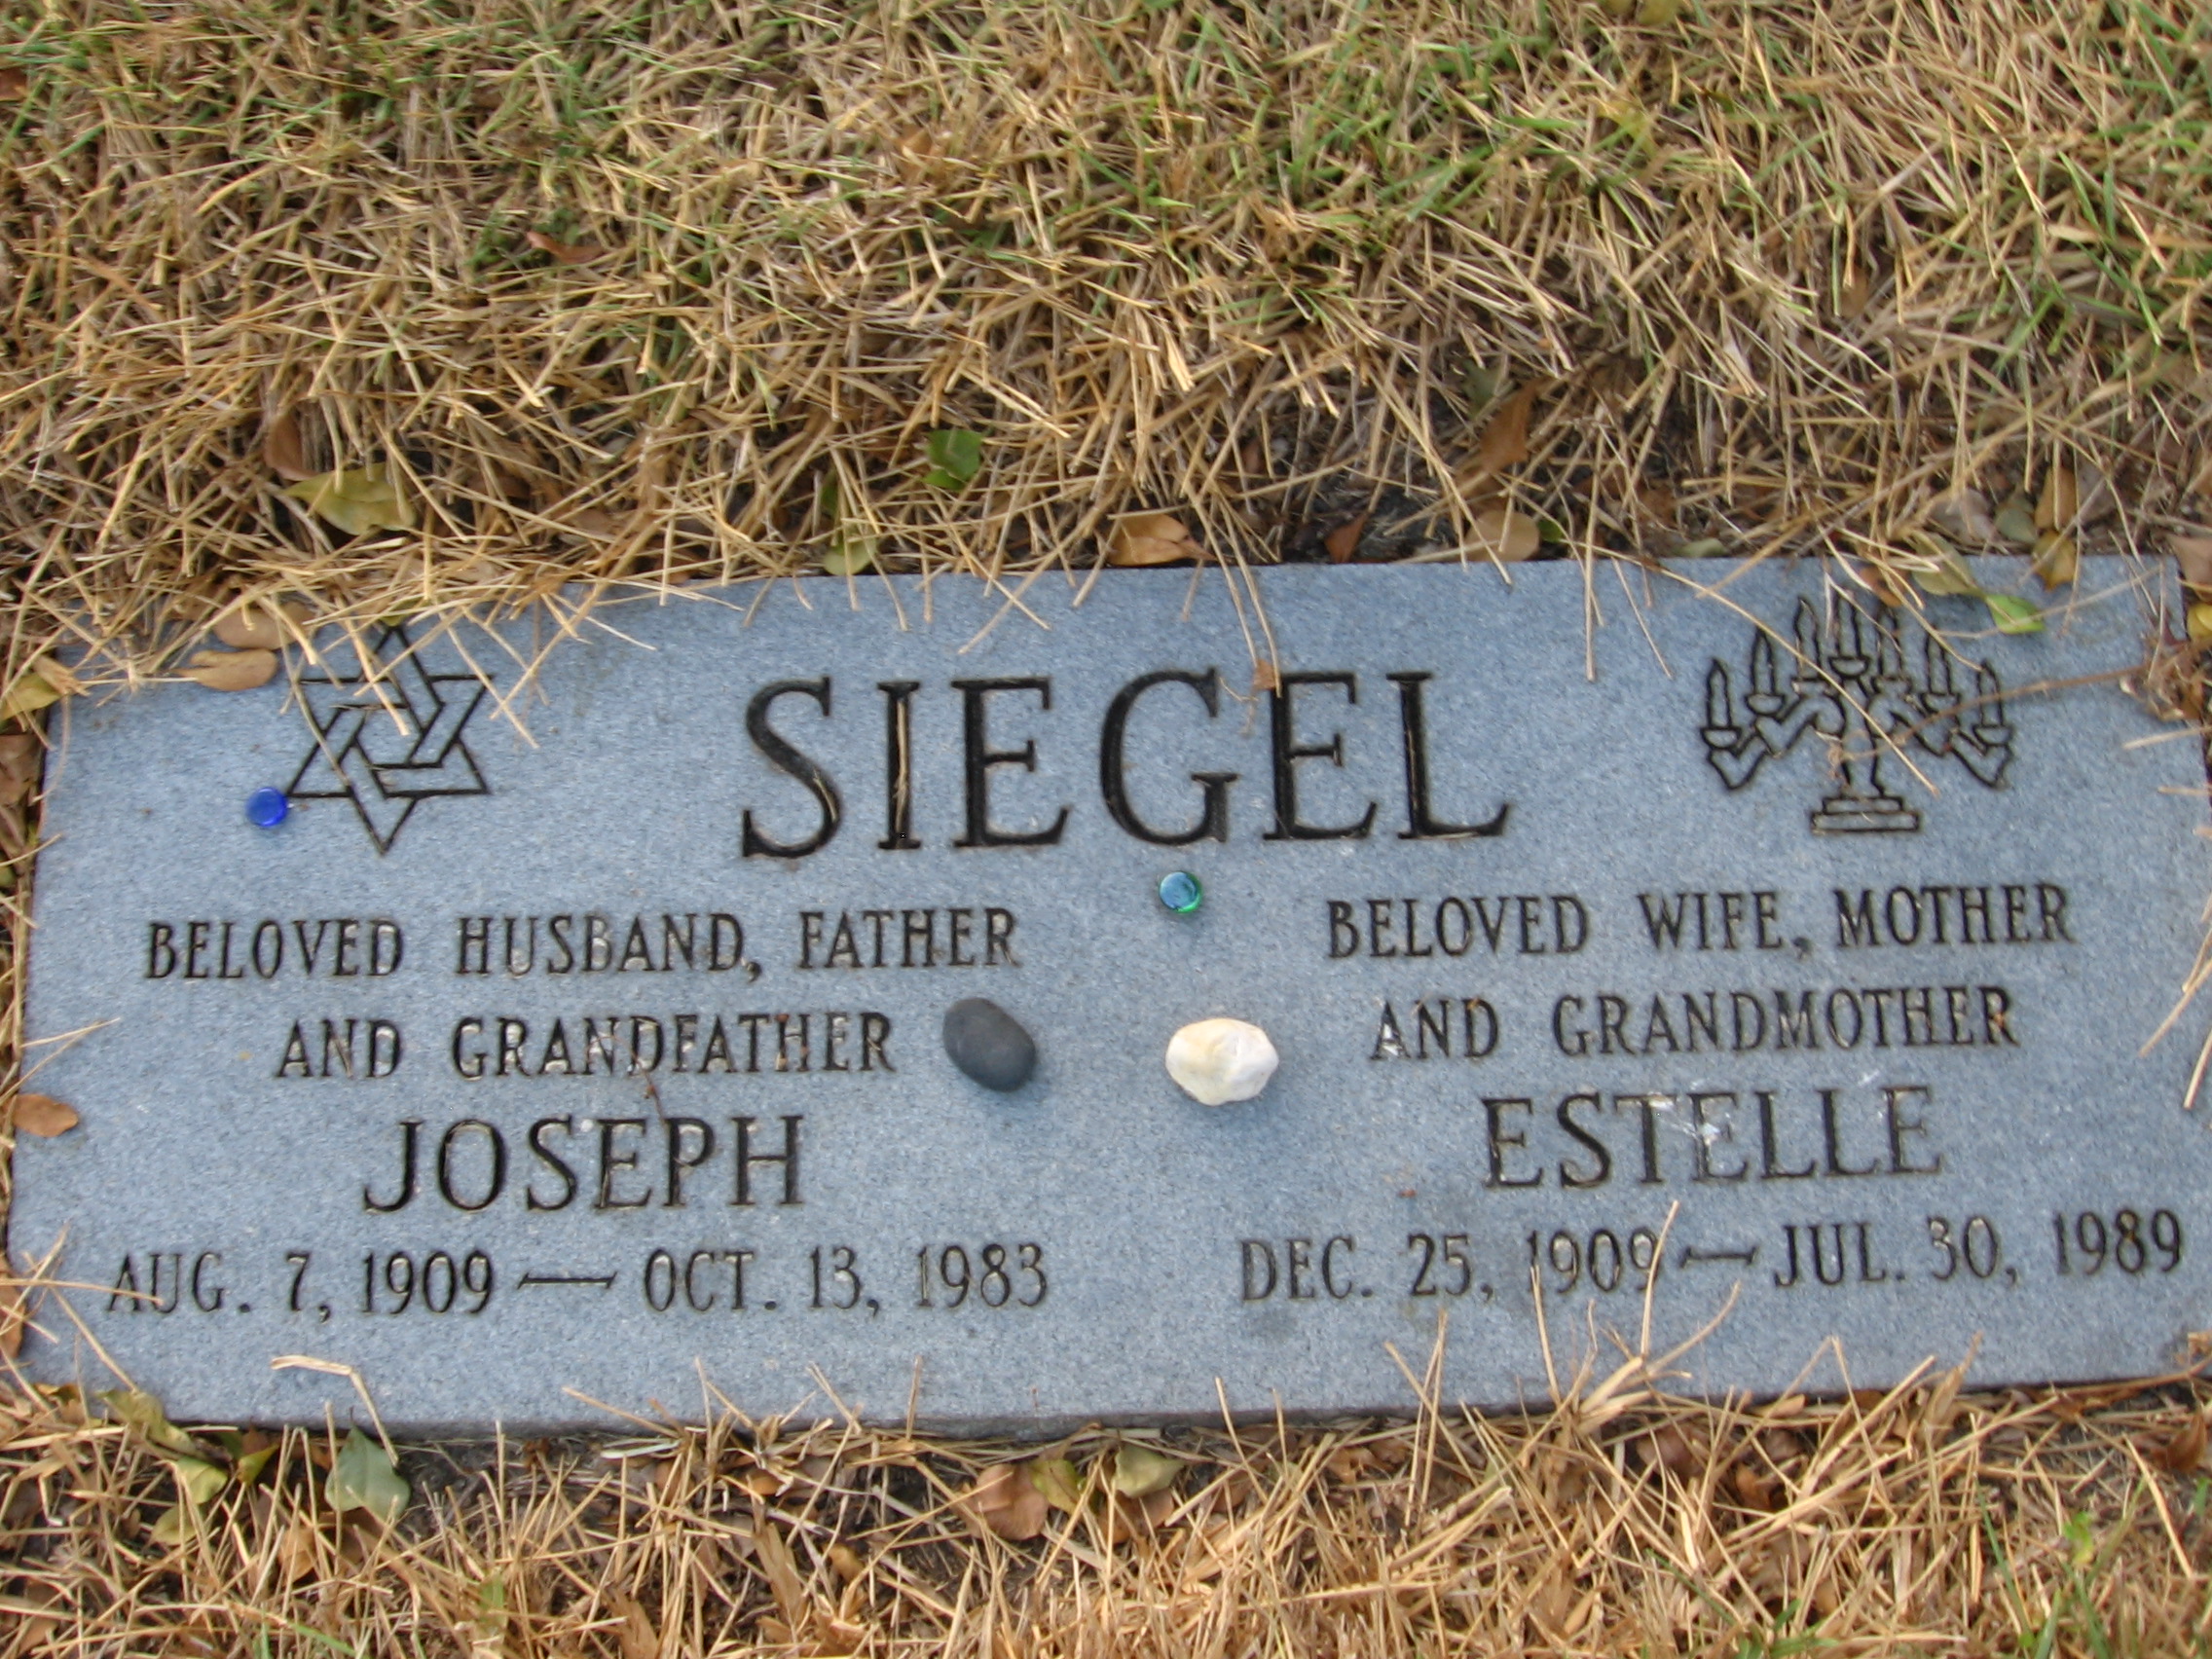 Joseph Siegel